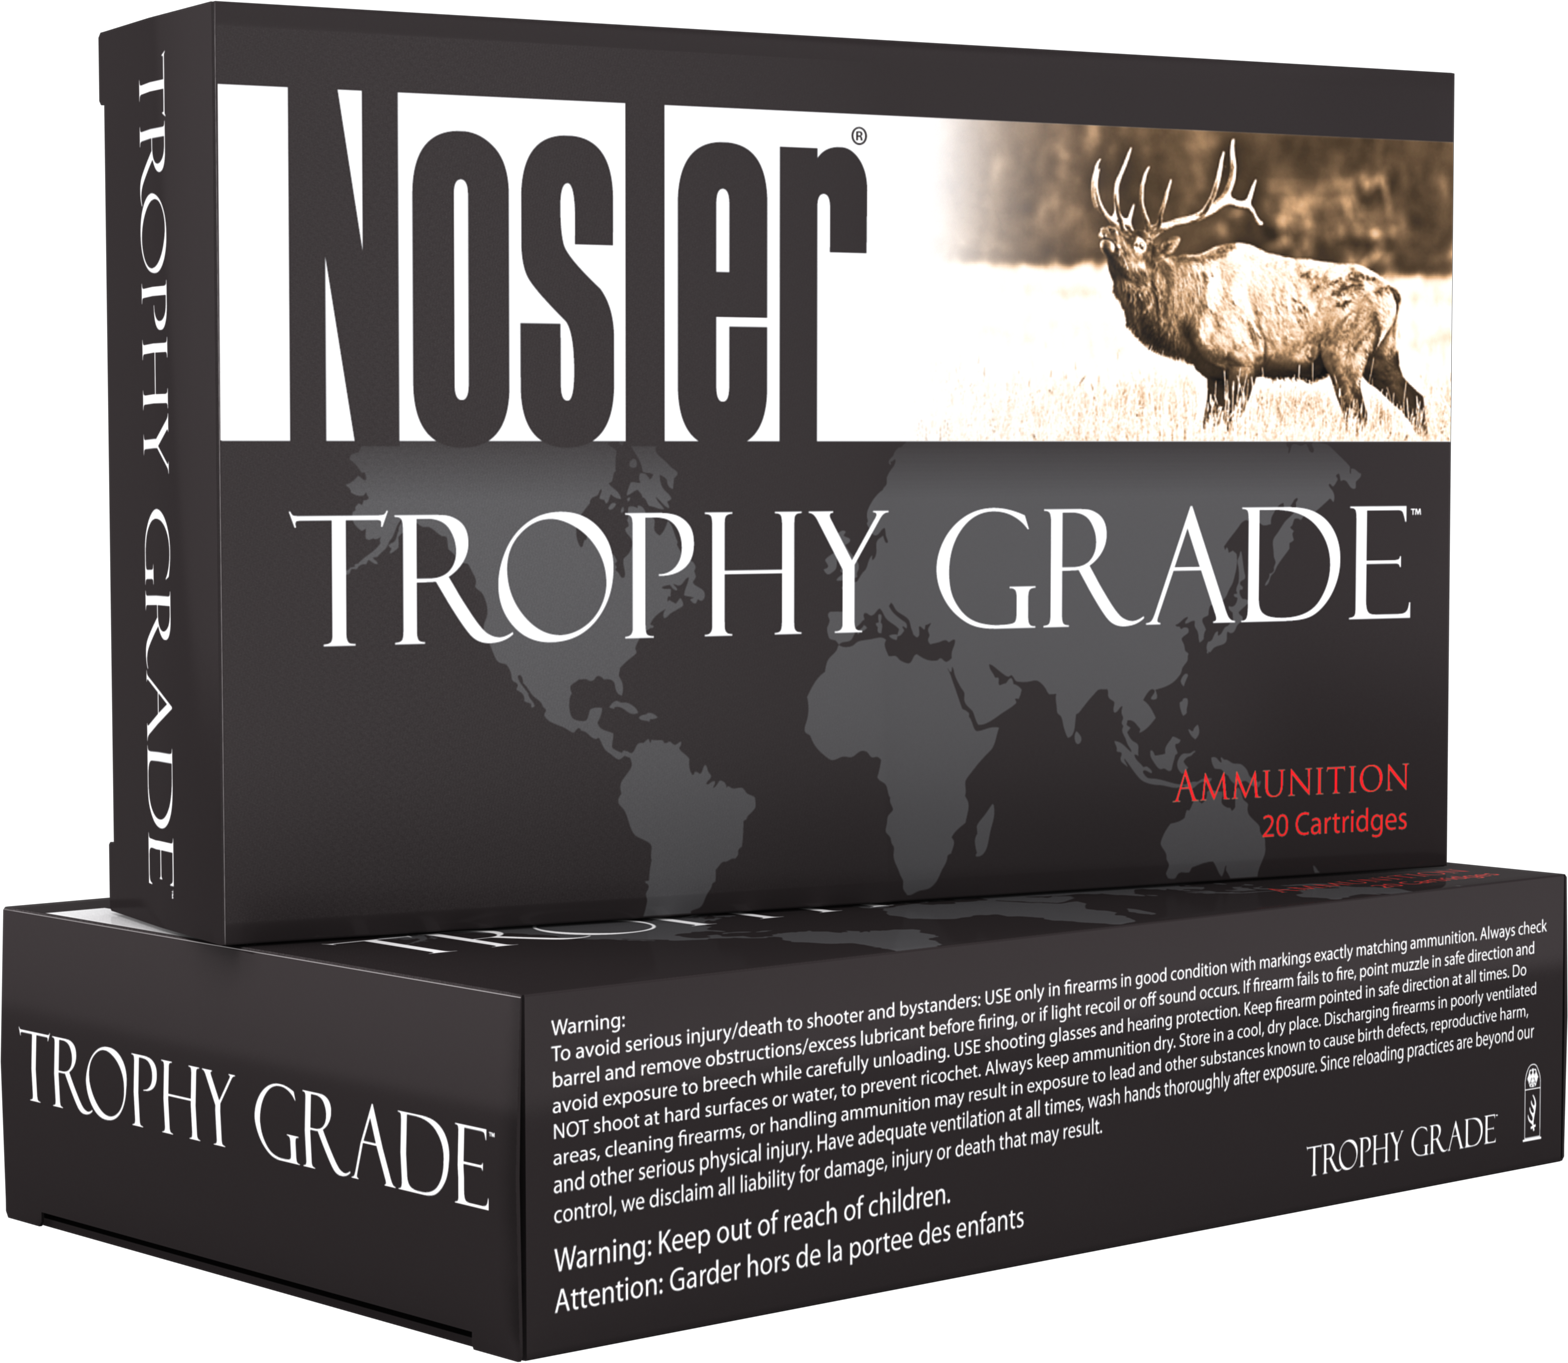 Nosler Trophy Grade AccuBond Ammo